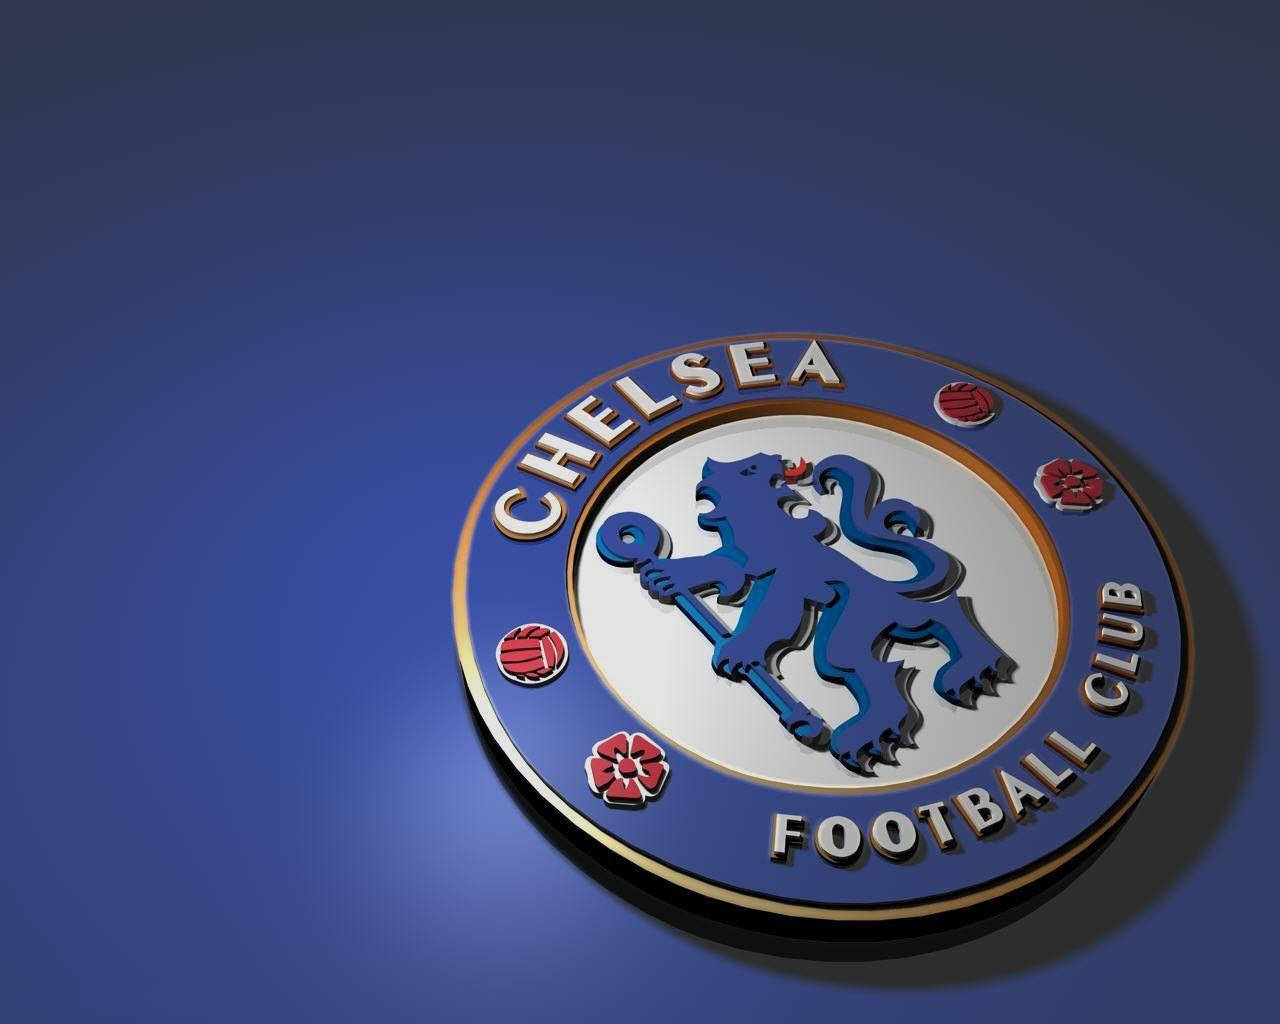 Chelsea Fc 3d Rendered Badge Background